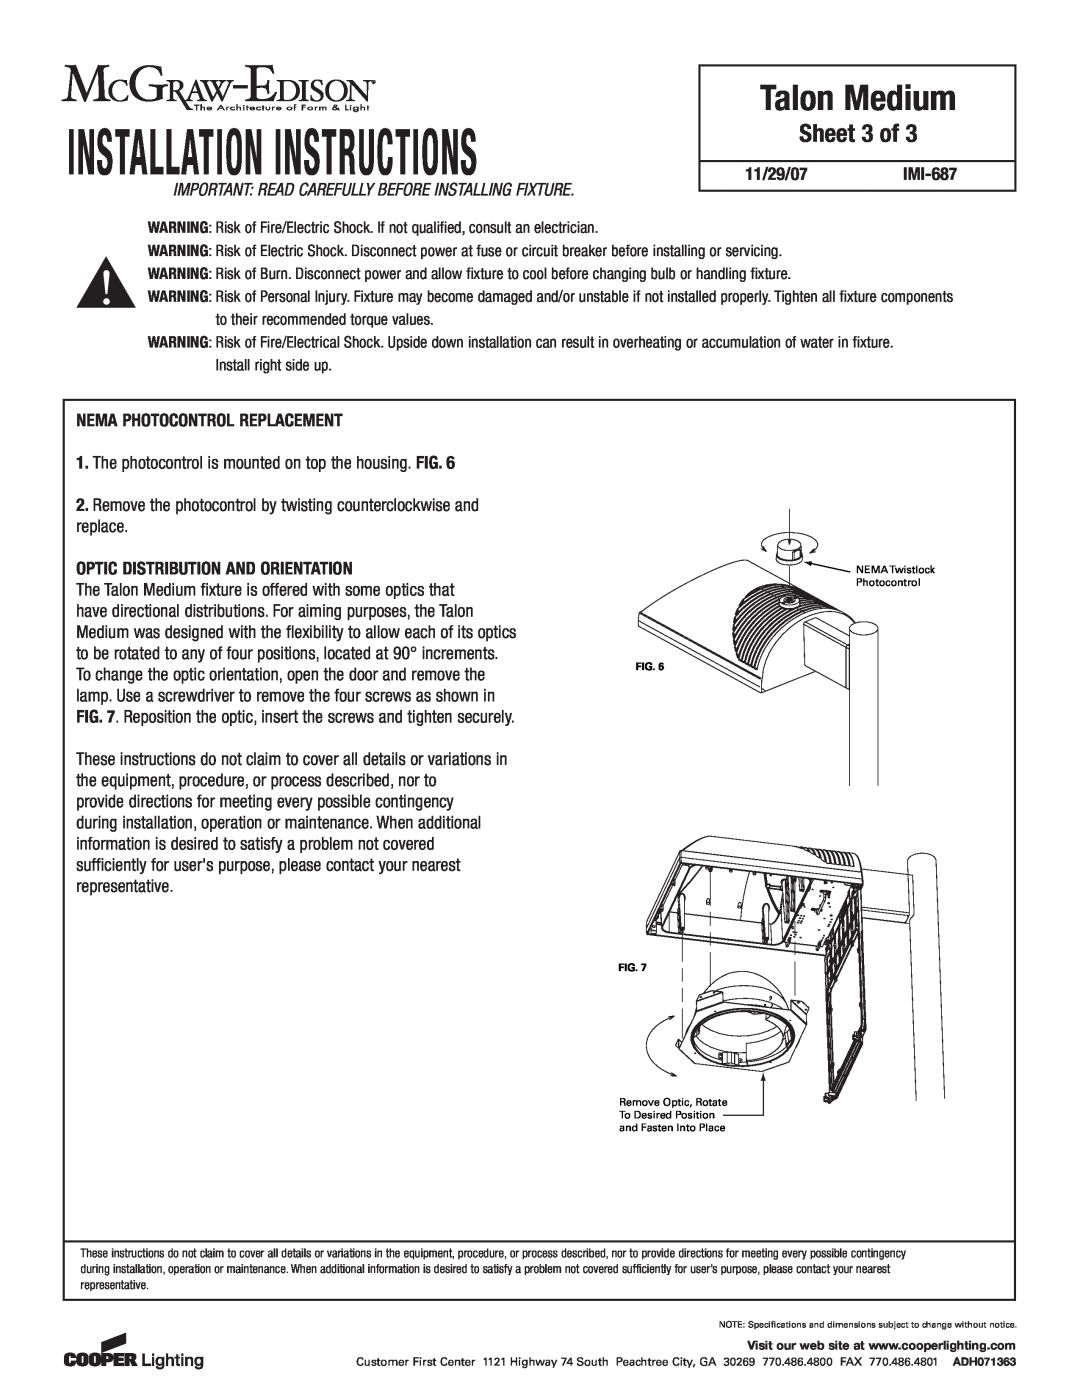 Cooper Lighting Sheet 3 of, Installation Instructions, Talon Medium, 11/29/07IMI-687, Nema Photocontrol Replacement 